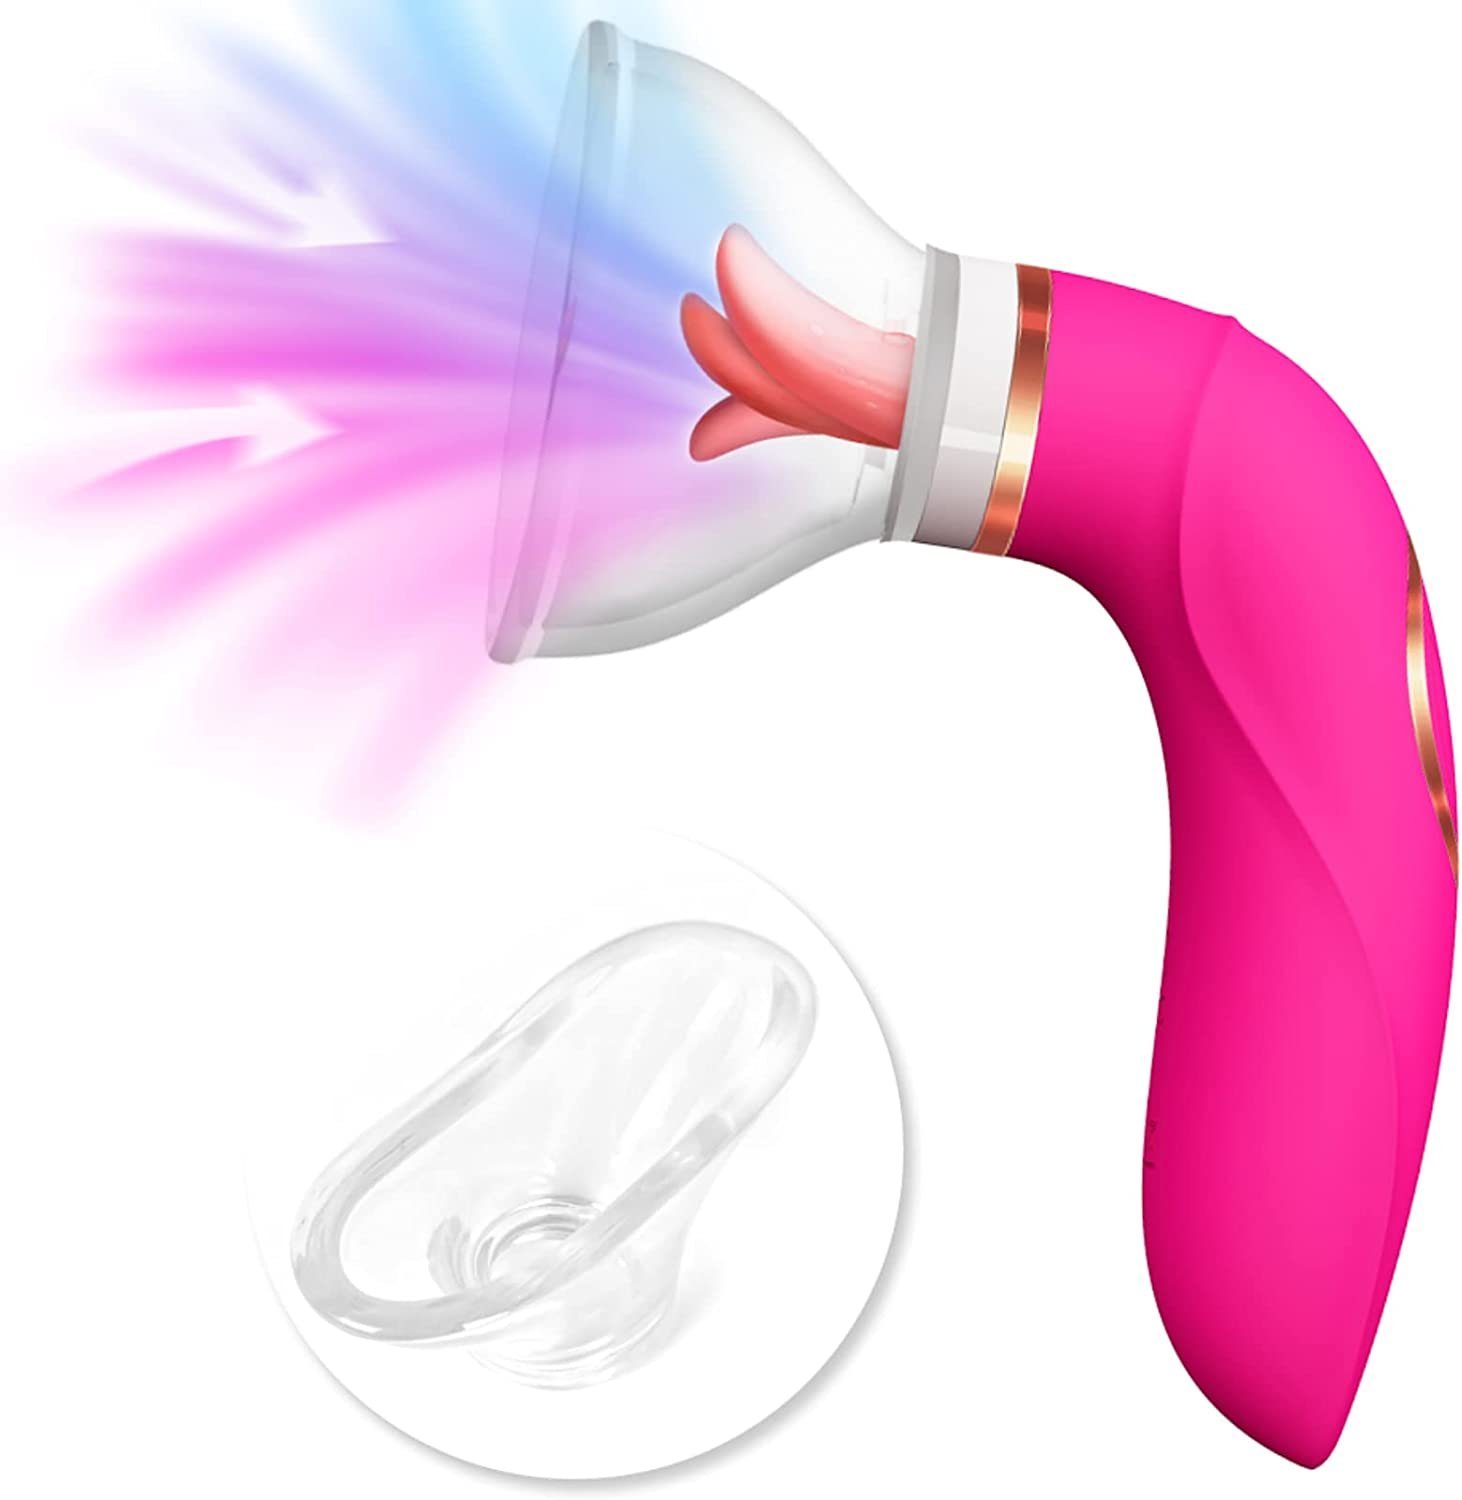 Vibrationsmodi autolock Mit Saugenmodi rosa Sexspielzeug, 10 Klitoris Sauger Klitoris-Stimulator 8 Vibratoren,Zungen Vibrator Erotik Lecken 5 Vibrationsmodi ohen